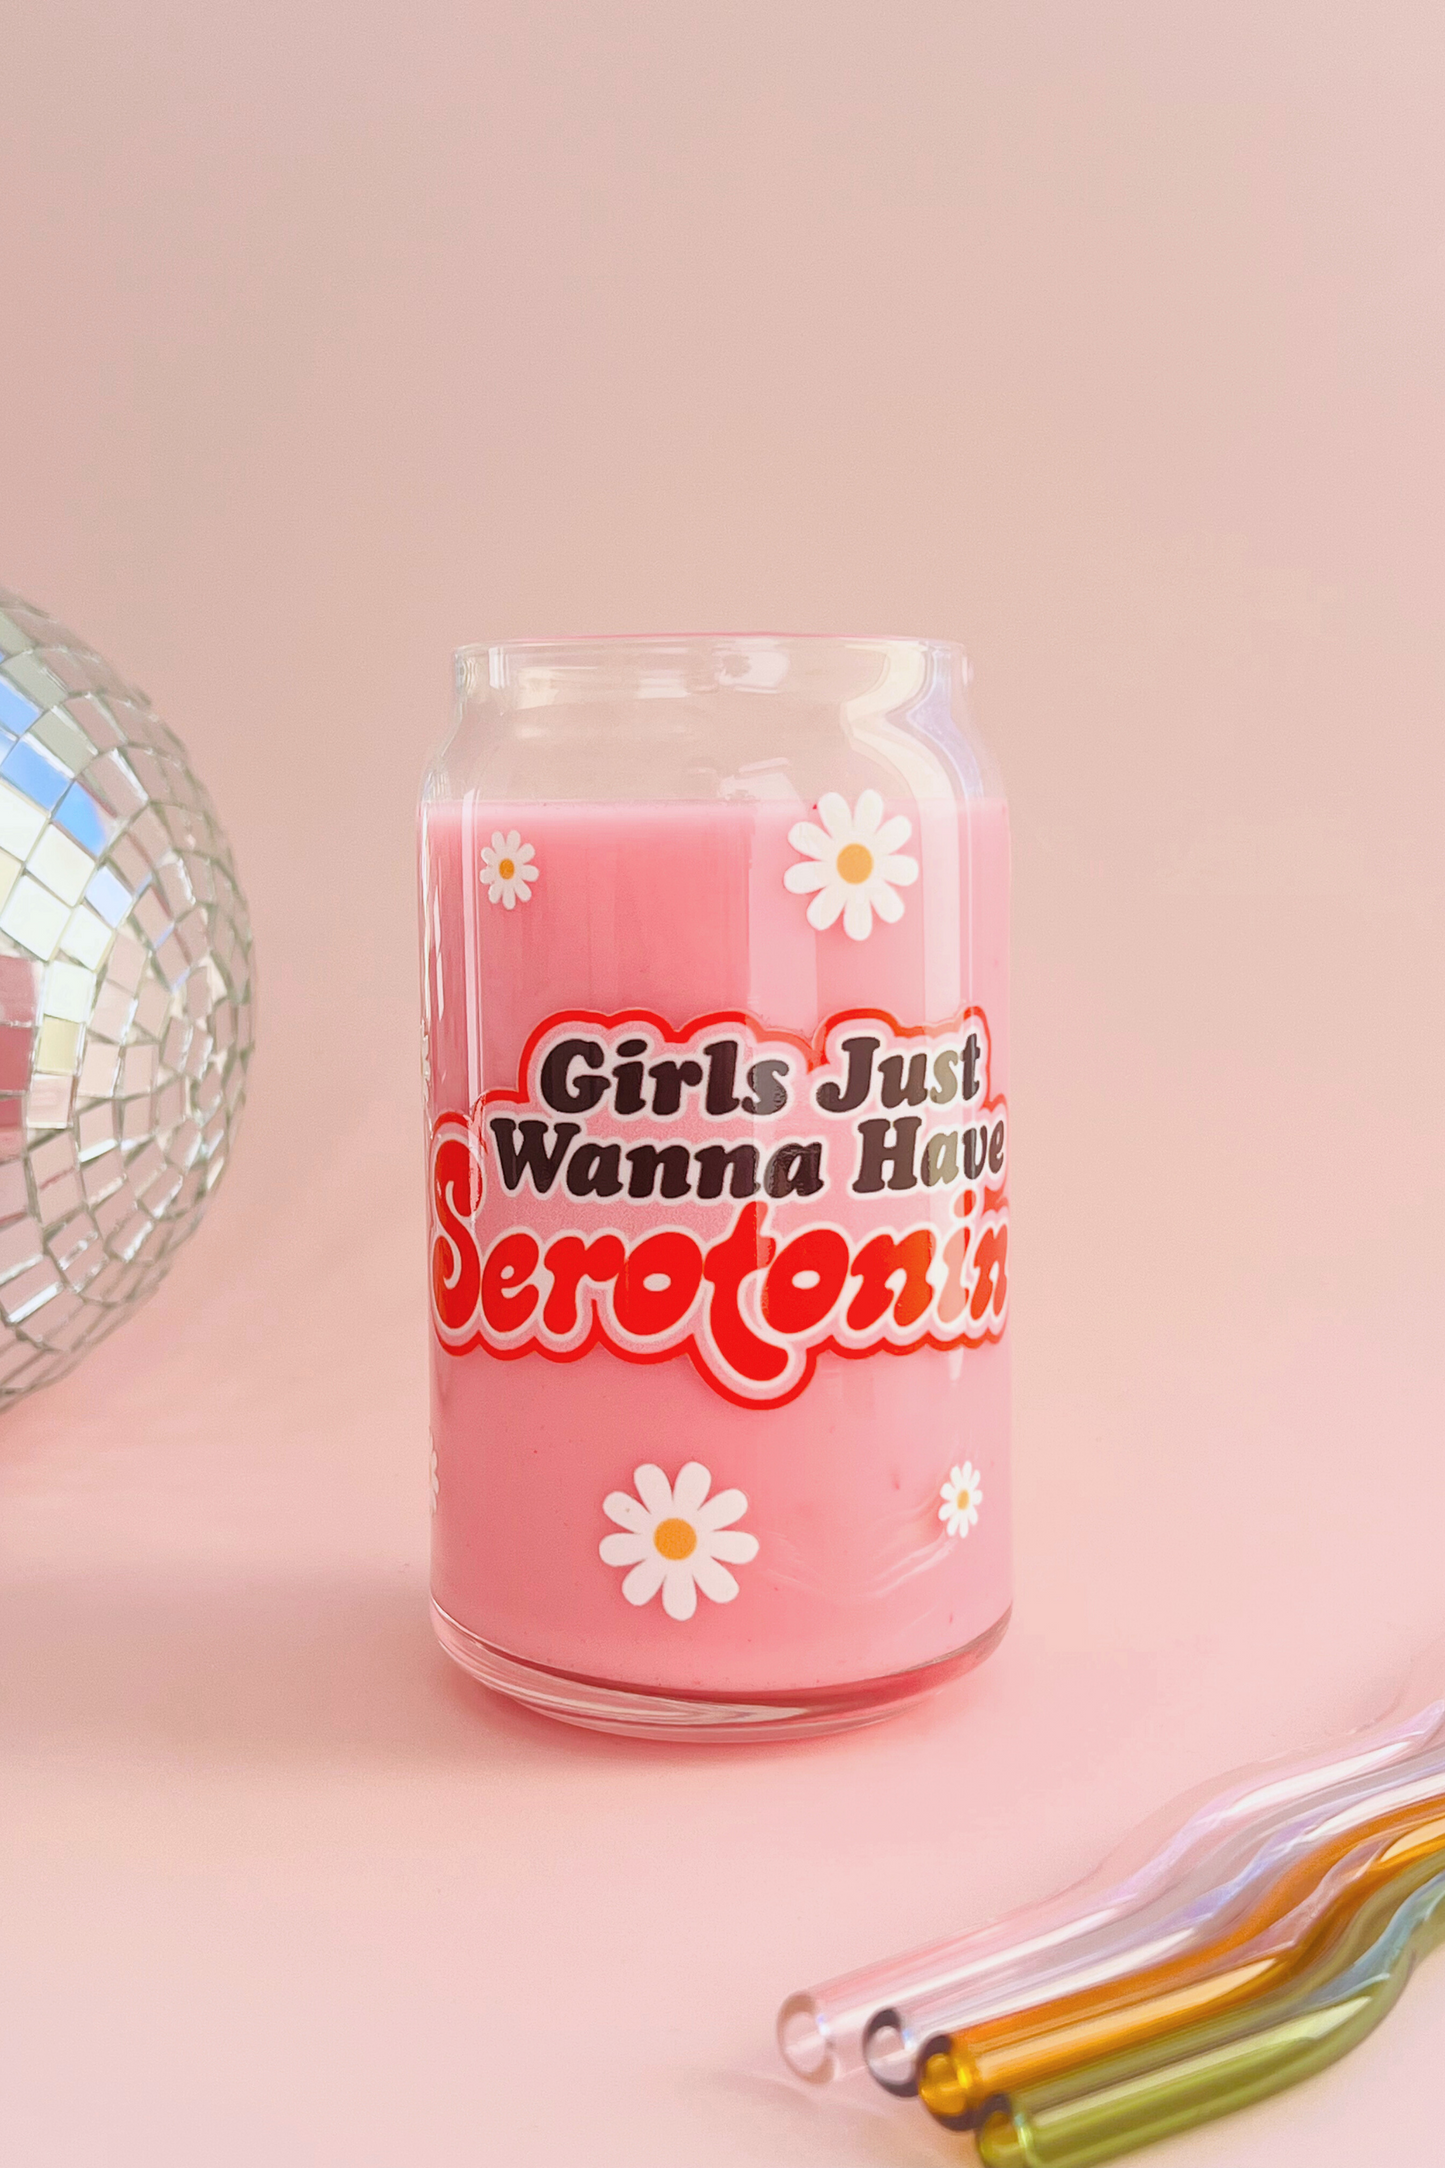 Girls Just Want Serotonin Glass Cup